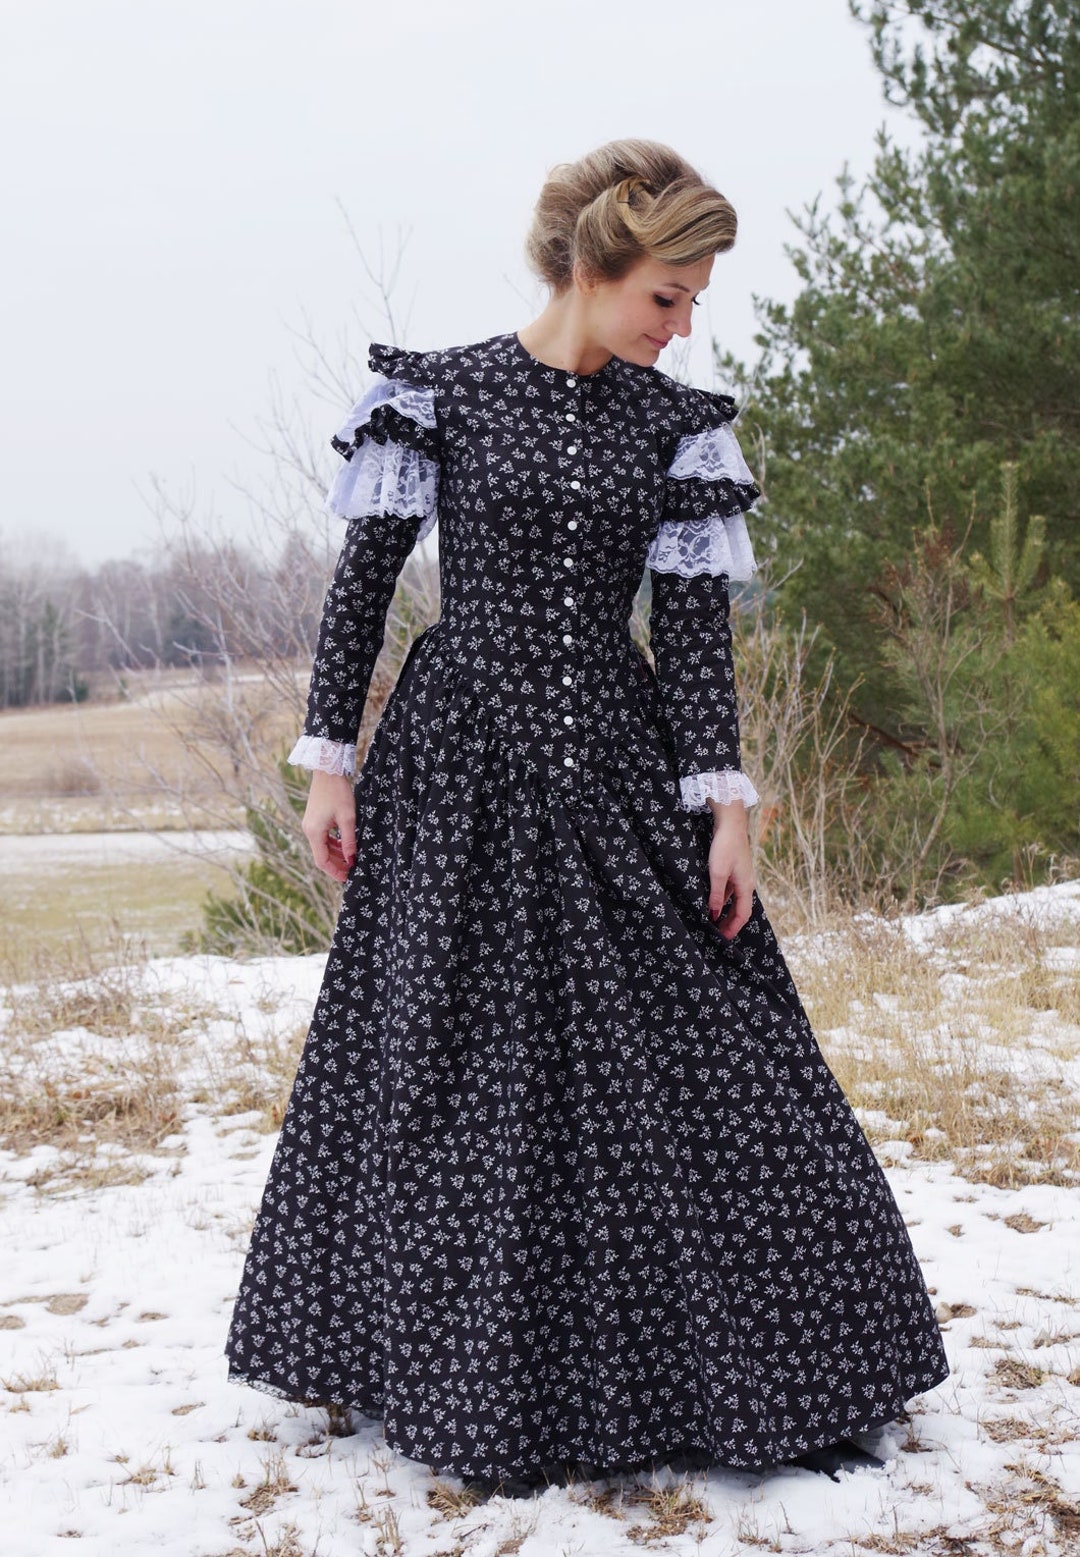 Vintage clothing cottage core jane Austen Bridgerton regency prairie dress